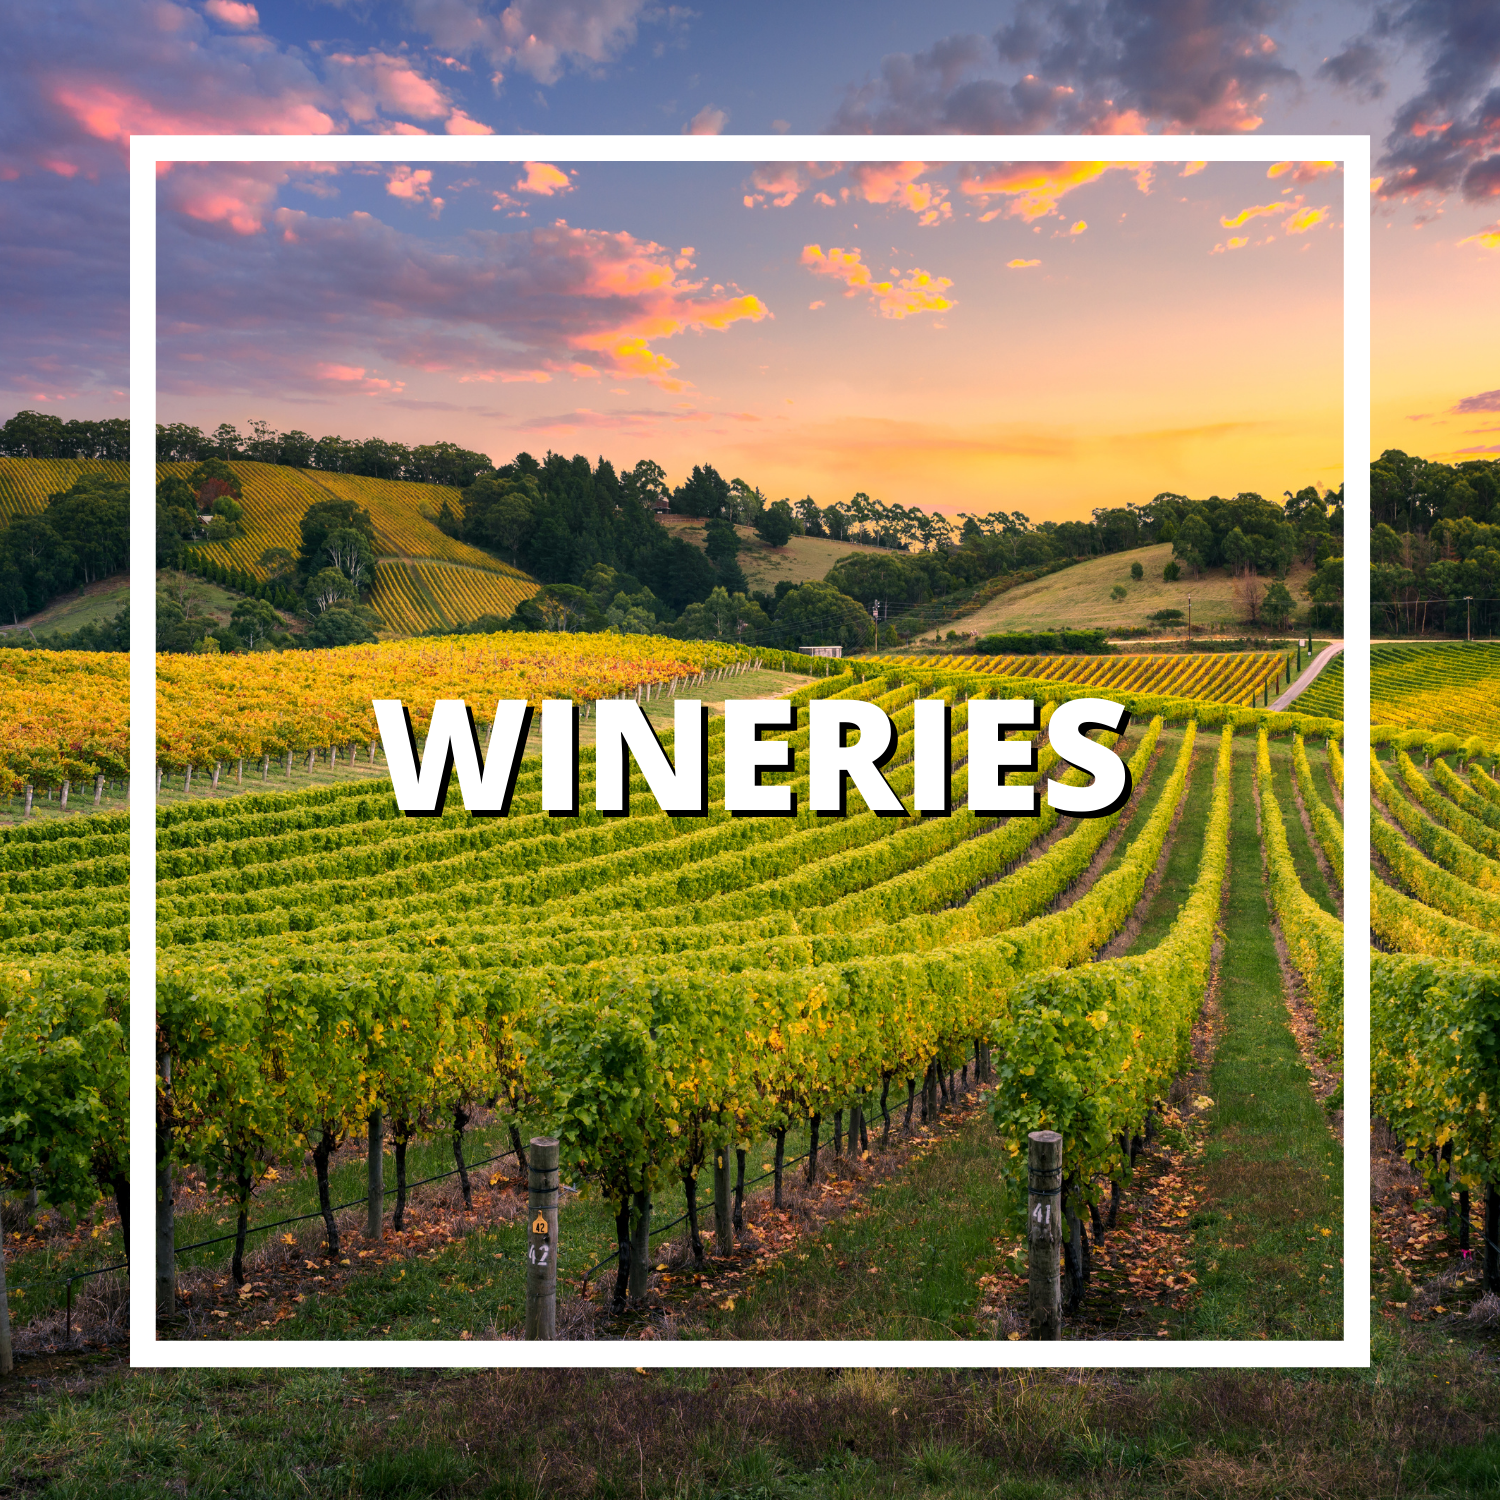 Wineries, Home, Local, Vineyard, Willamette Valley, Oregon, Josie Carothers, Real Estate